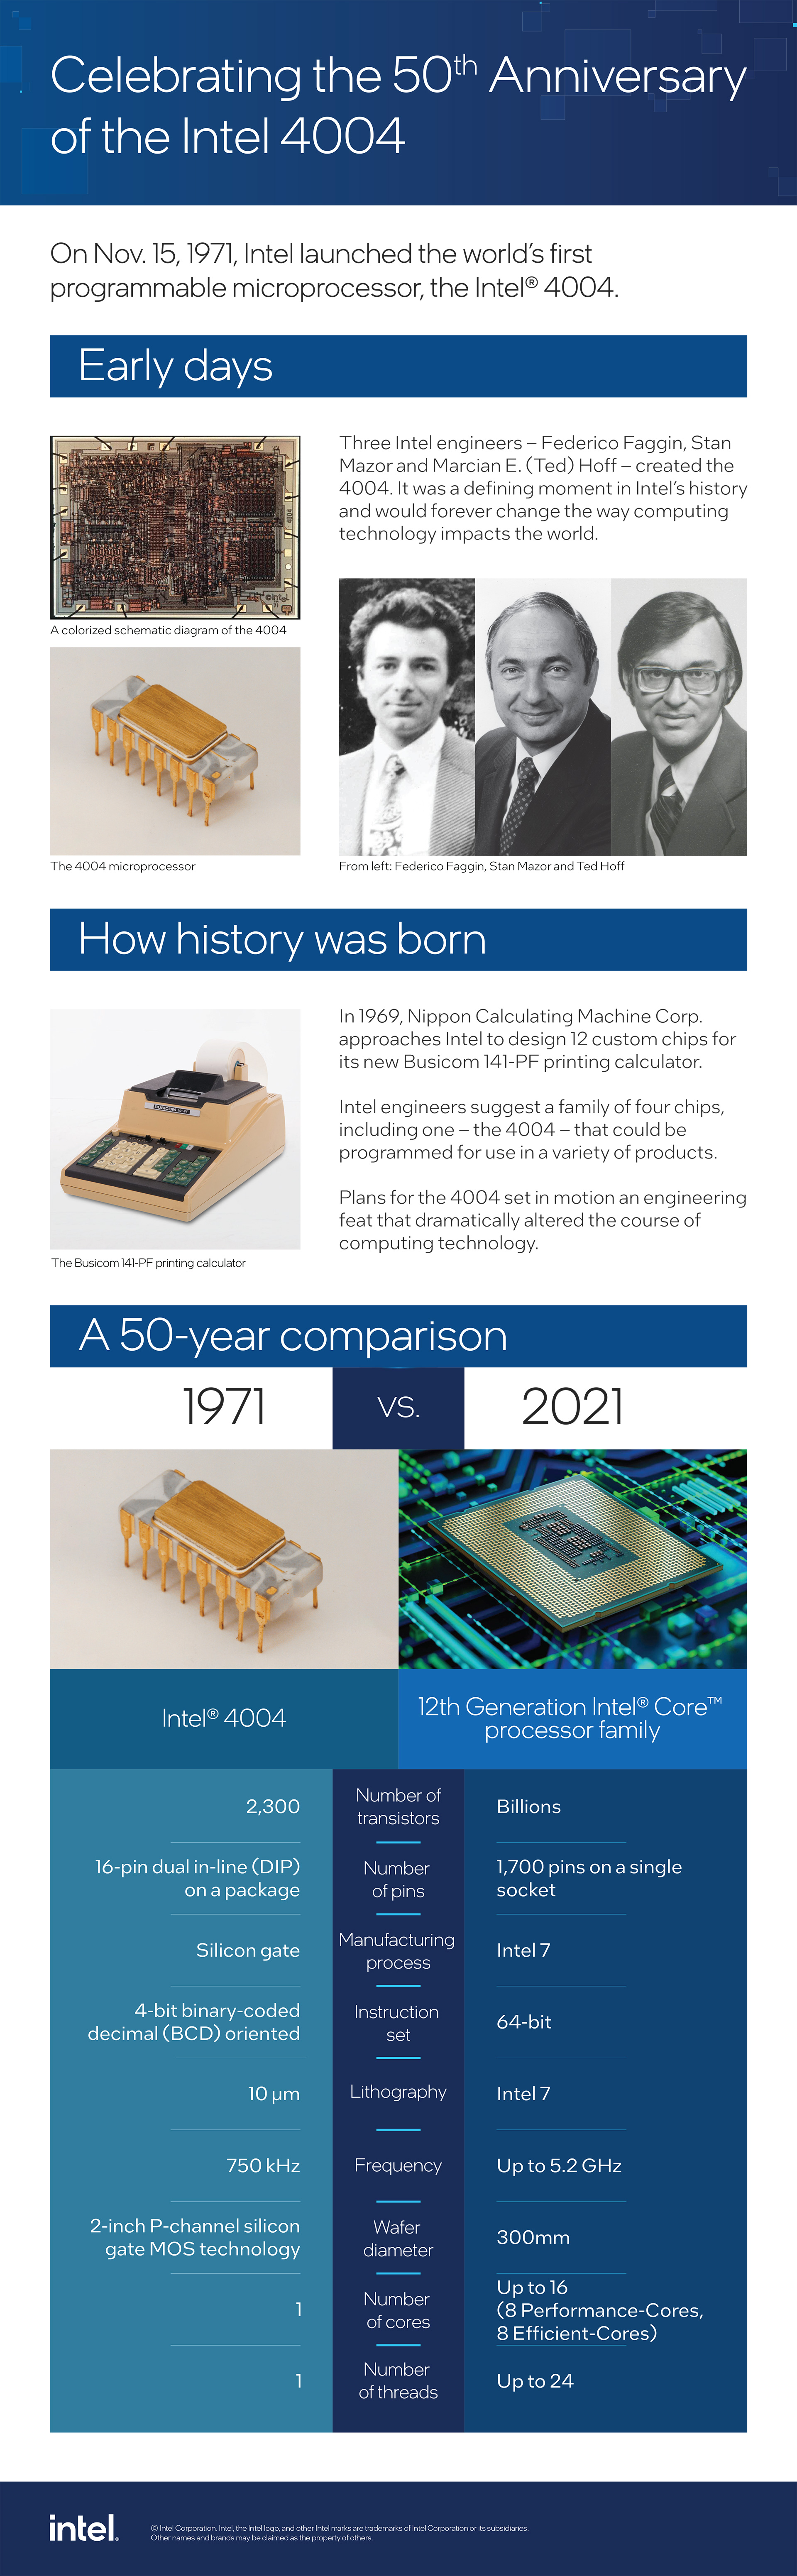 Celebrating the Intel 4004